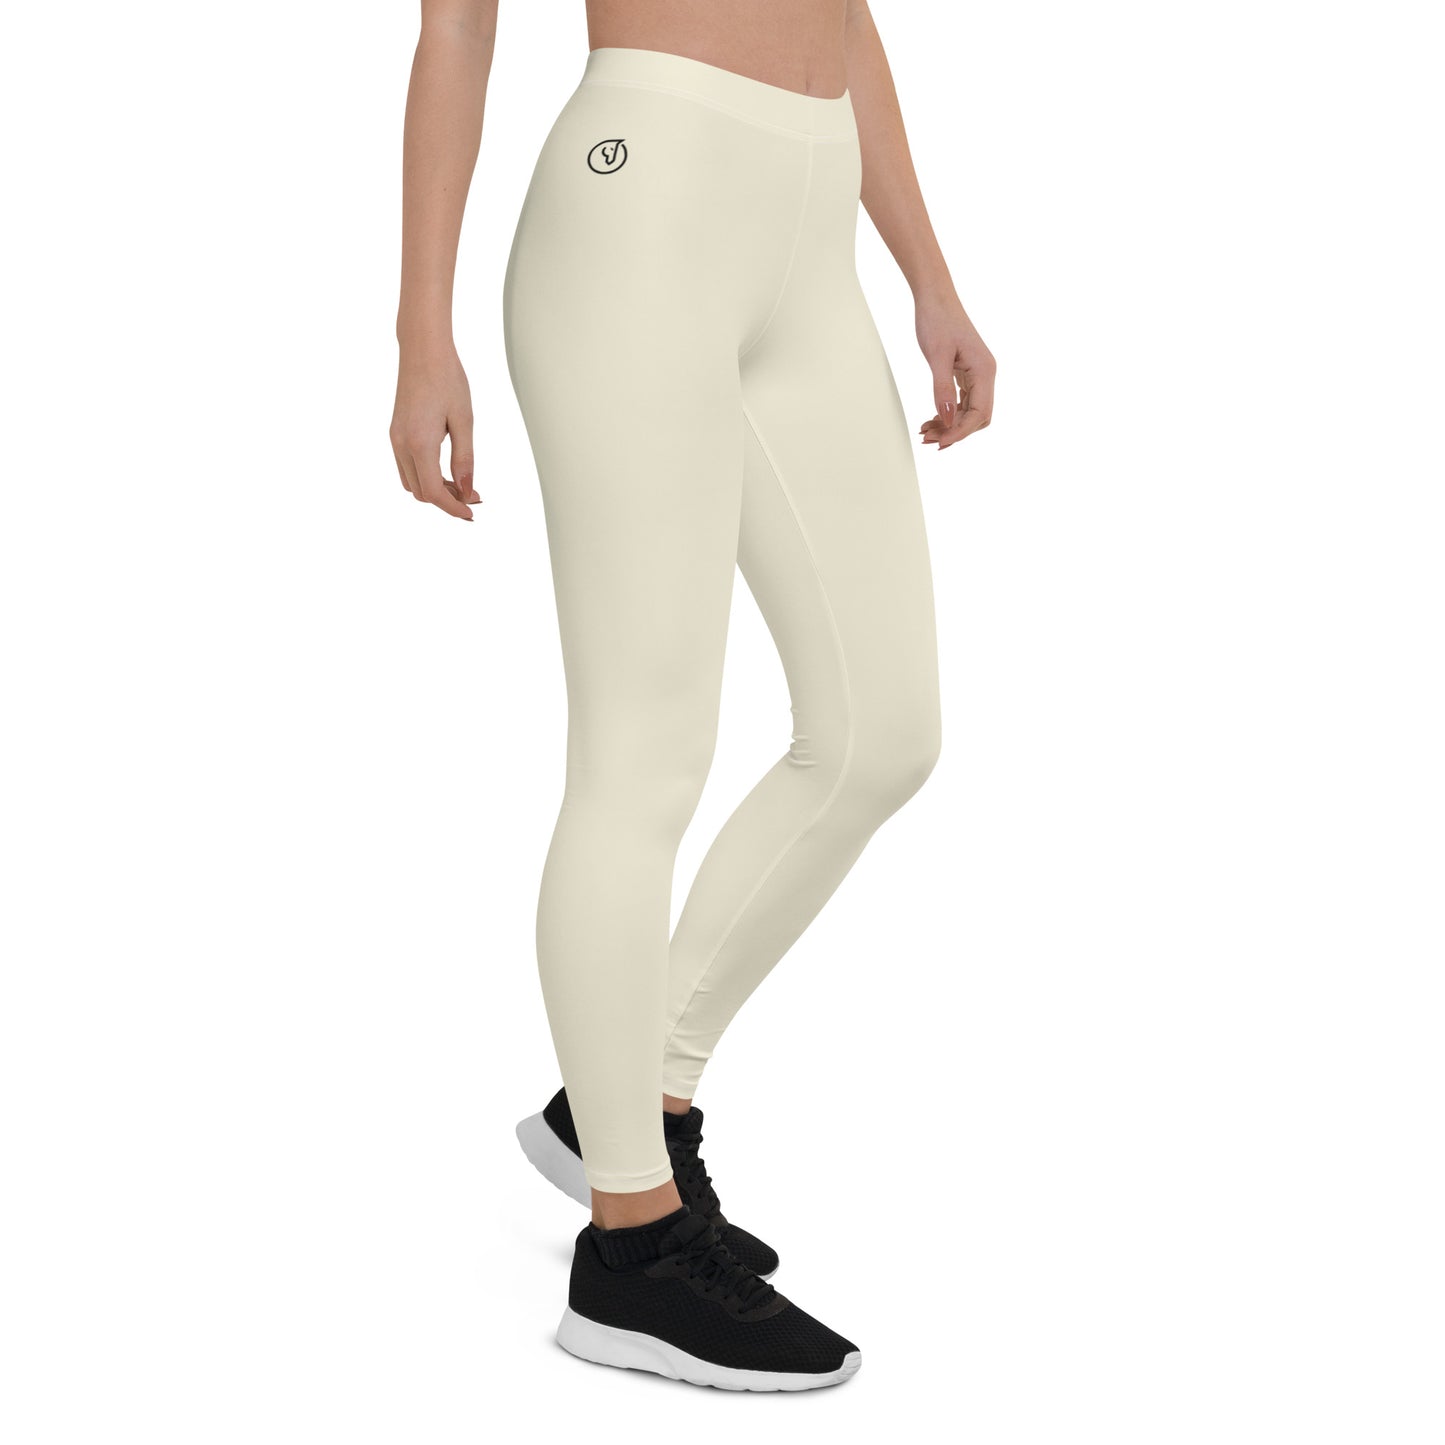 Humble Sportswear, women’s color match leggings, women’s spandex leggings, 7/8th leggings for women